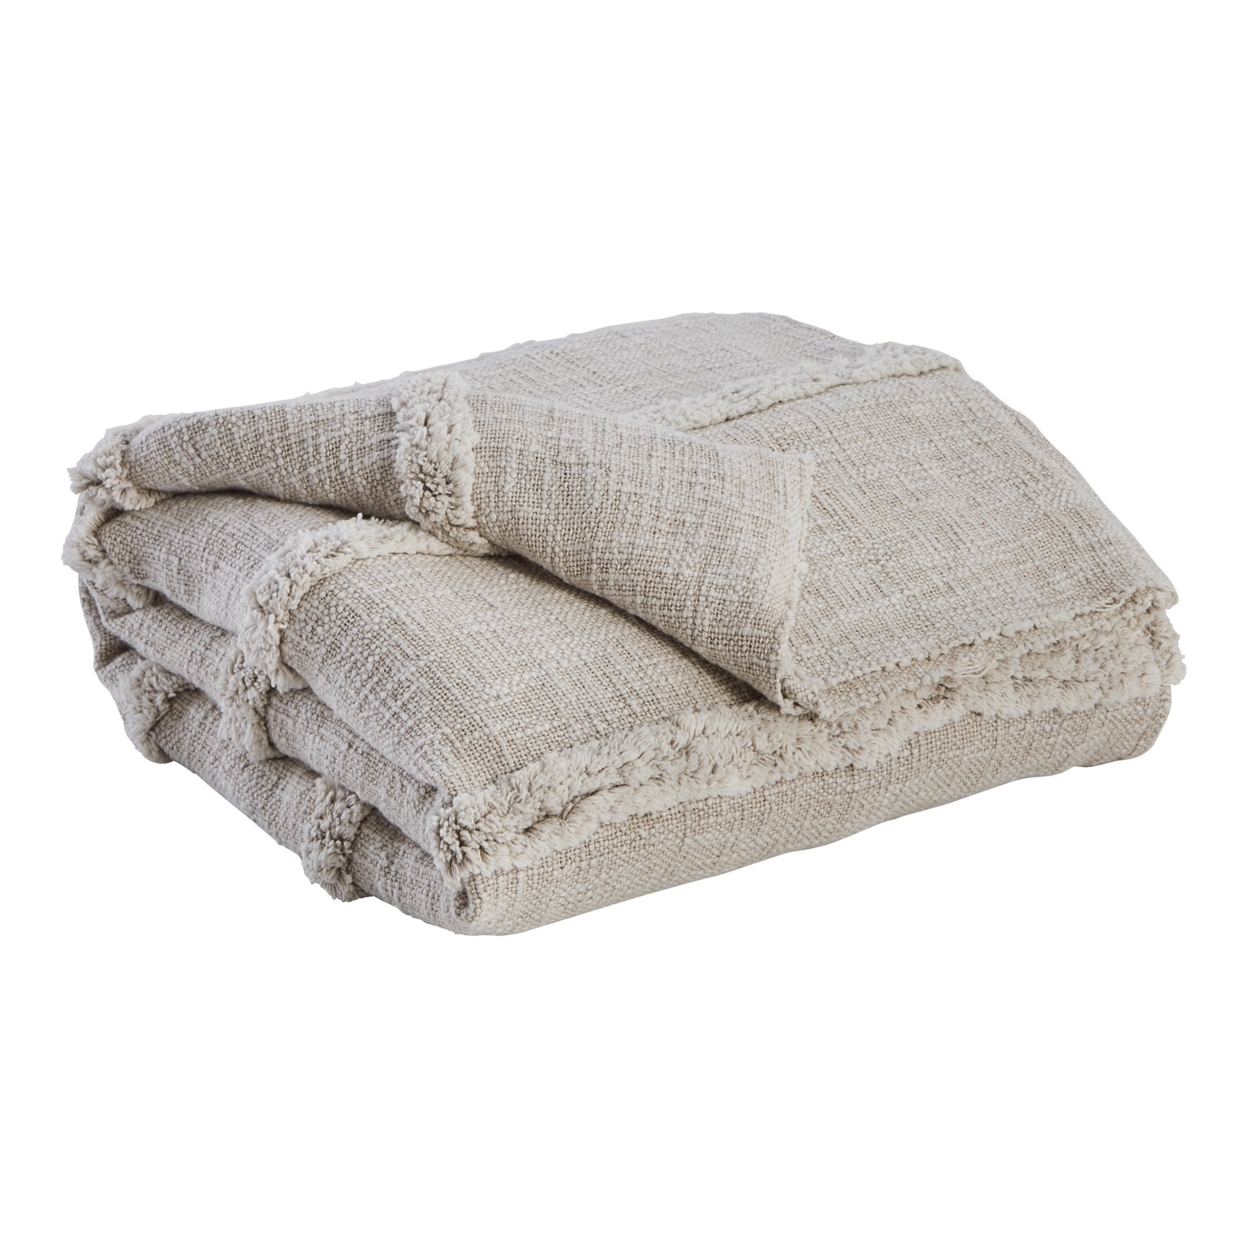 60 Inch Soft Cotton Throw Blanket With Stonewashed Stripe Design, Gray- Saltoro Sherpi